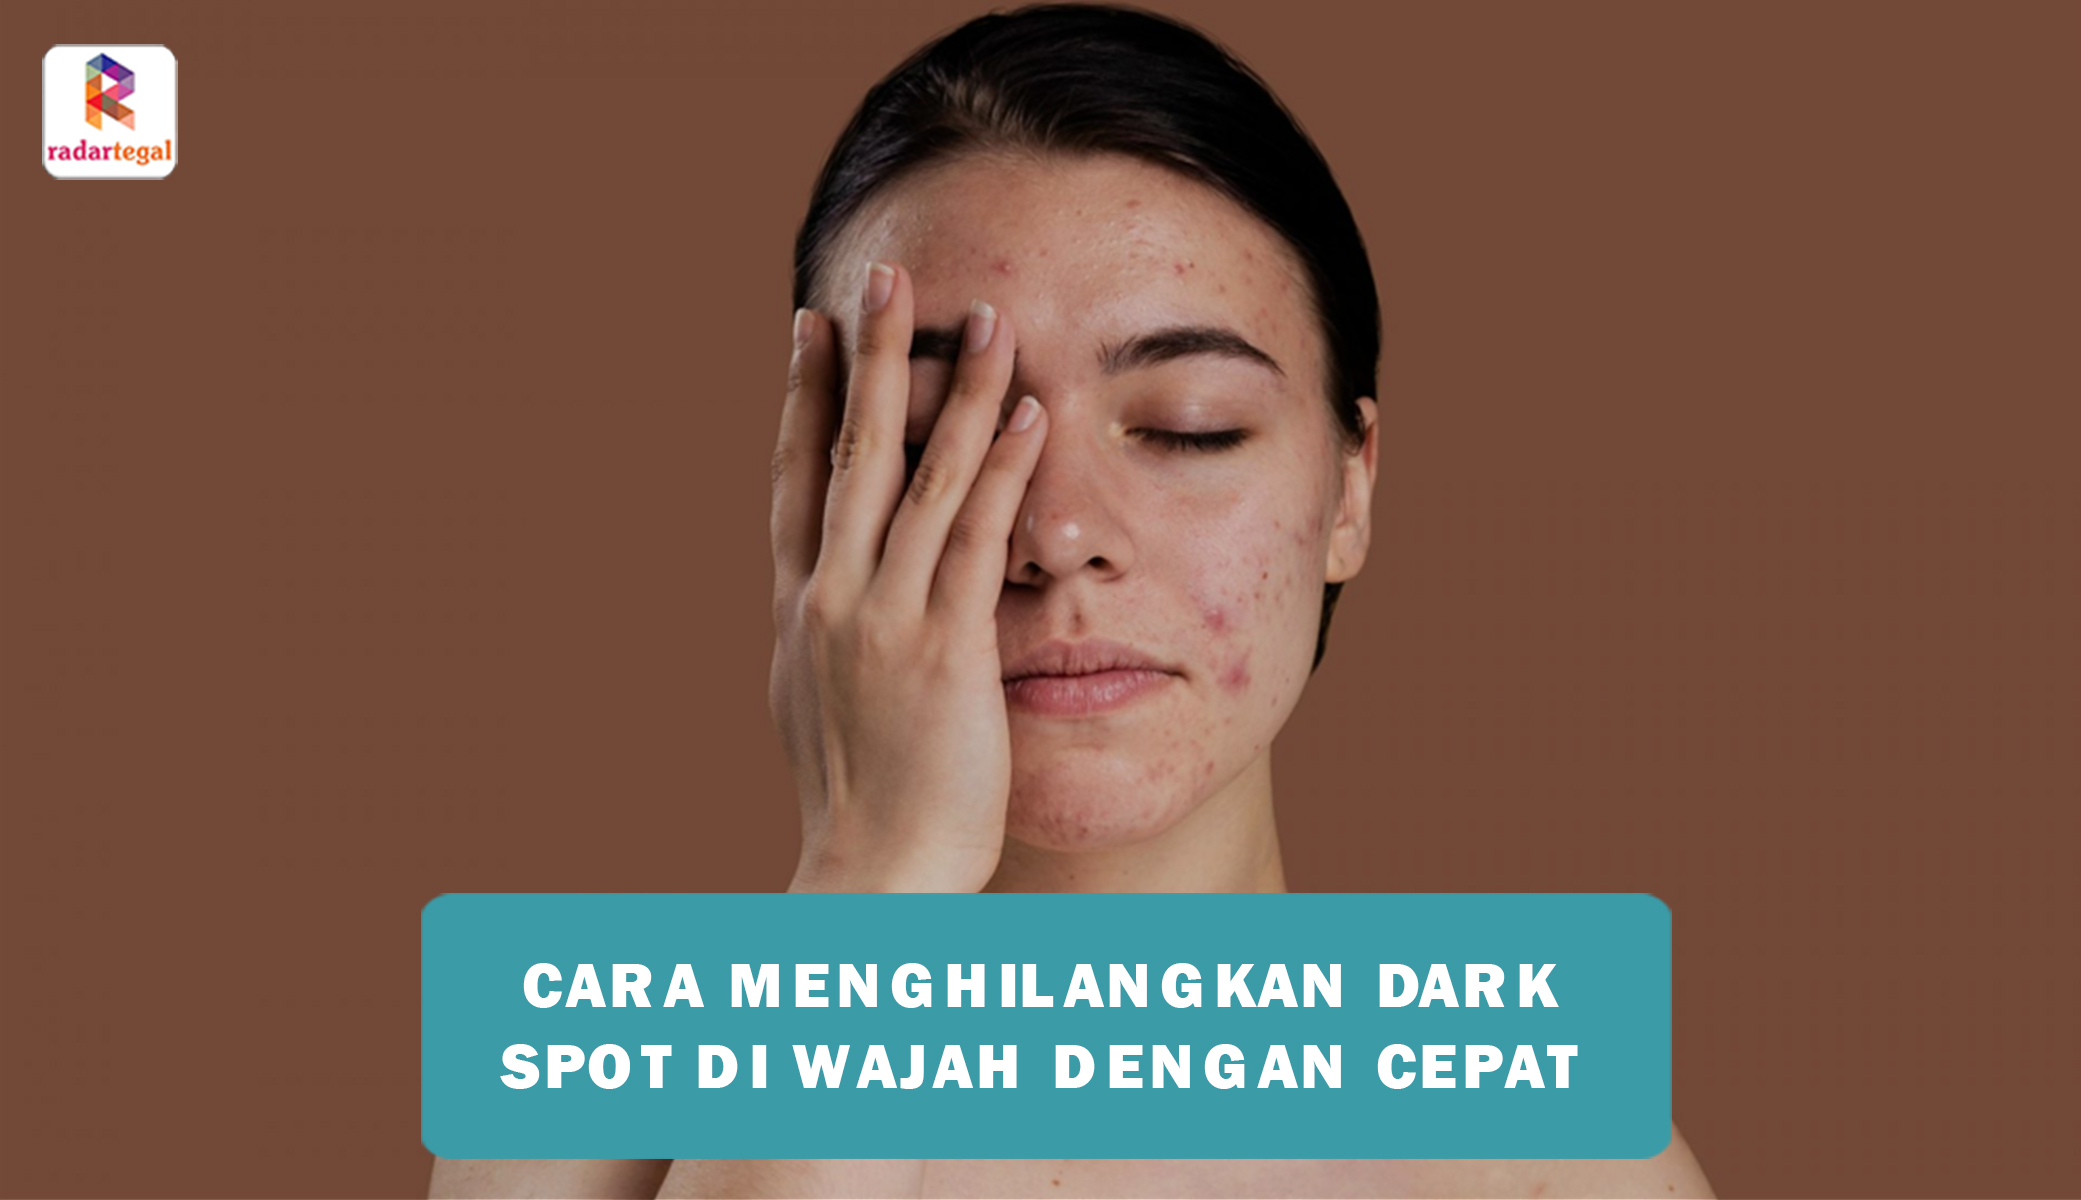 4 Cara Menghilangkan Dark Spot di Wajah dengan Cepat dan Efektif, Terbukti Bikin Kulit Bersih dan Cerah